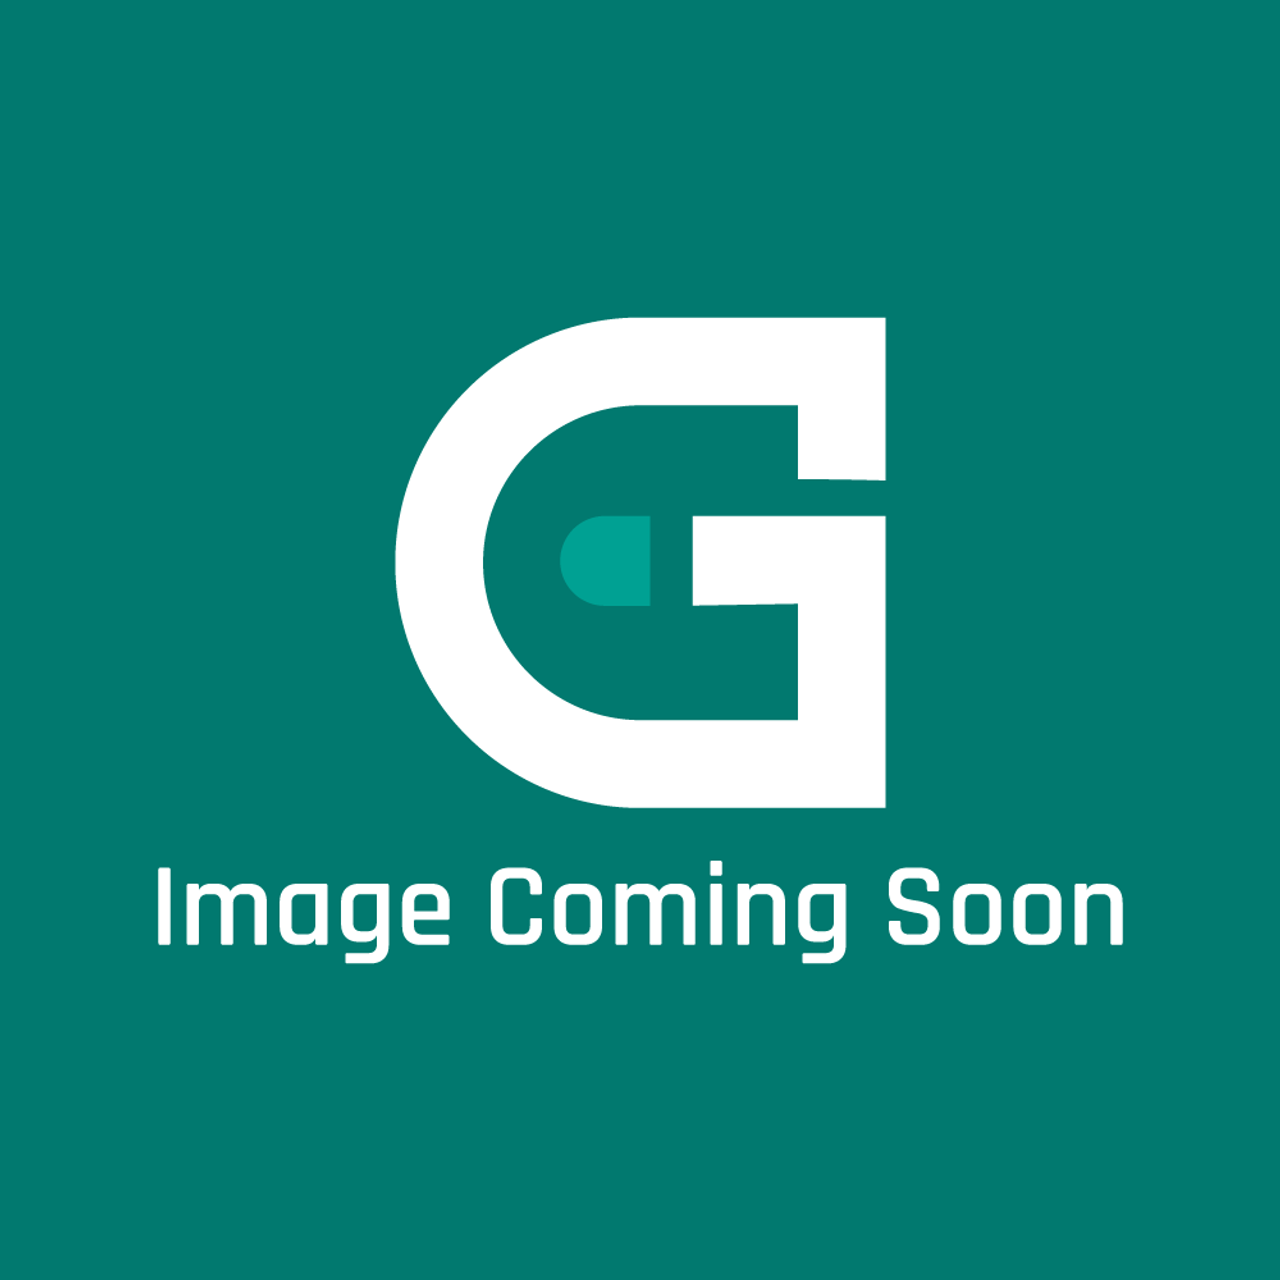 GE Appliances WR38X10427 - Trim Asm Cmk - Image Coming Soon!